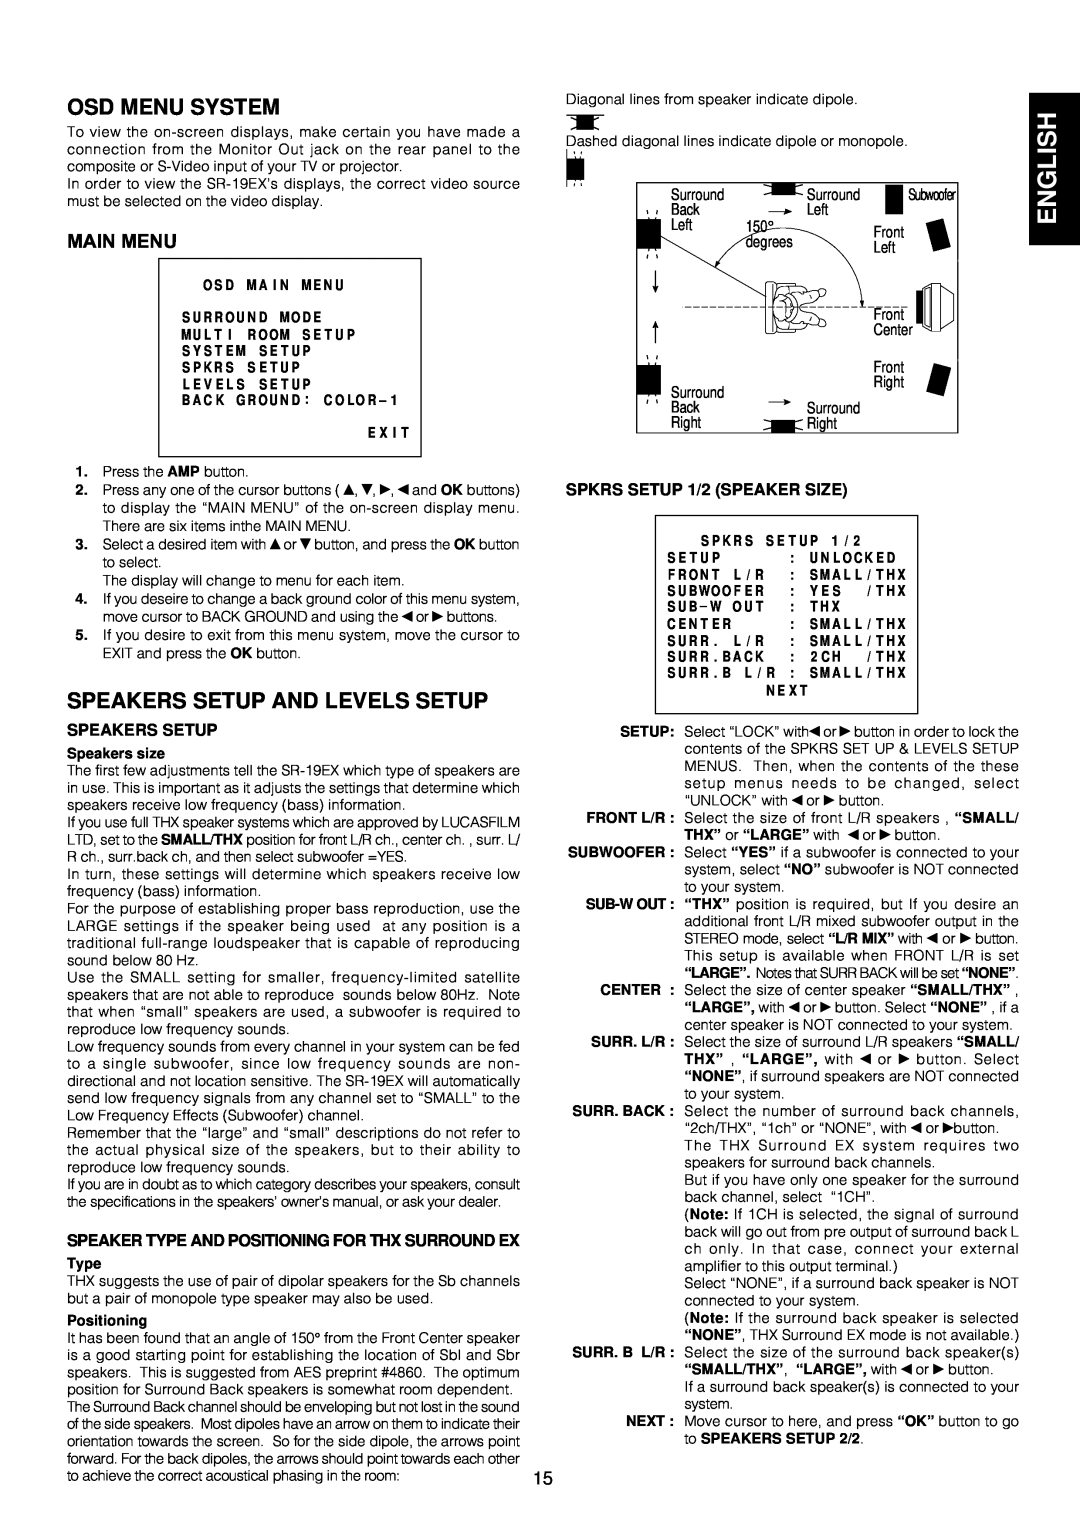 Marantz SR-18EX manual English, Main Menu, Speakers Setup, Speaker Type And Positioning For Thx Surround Ex 